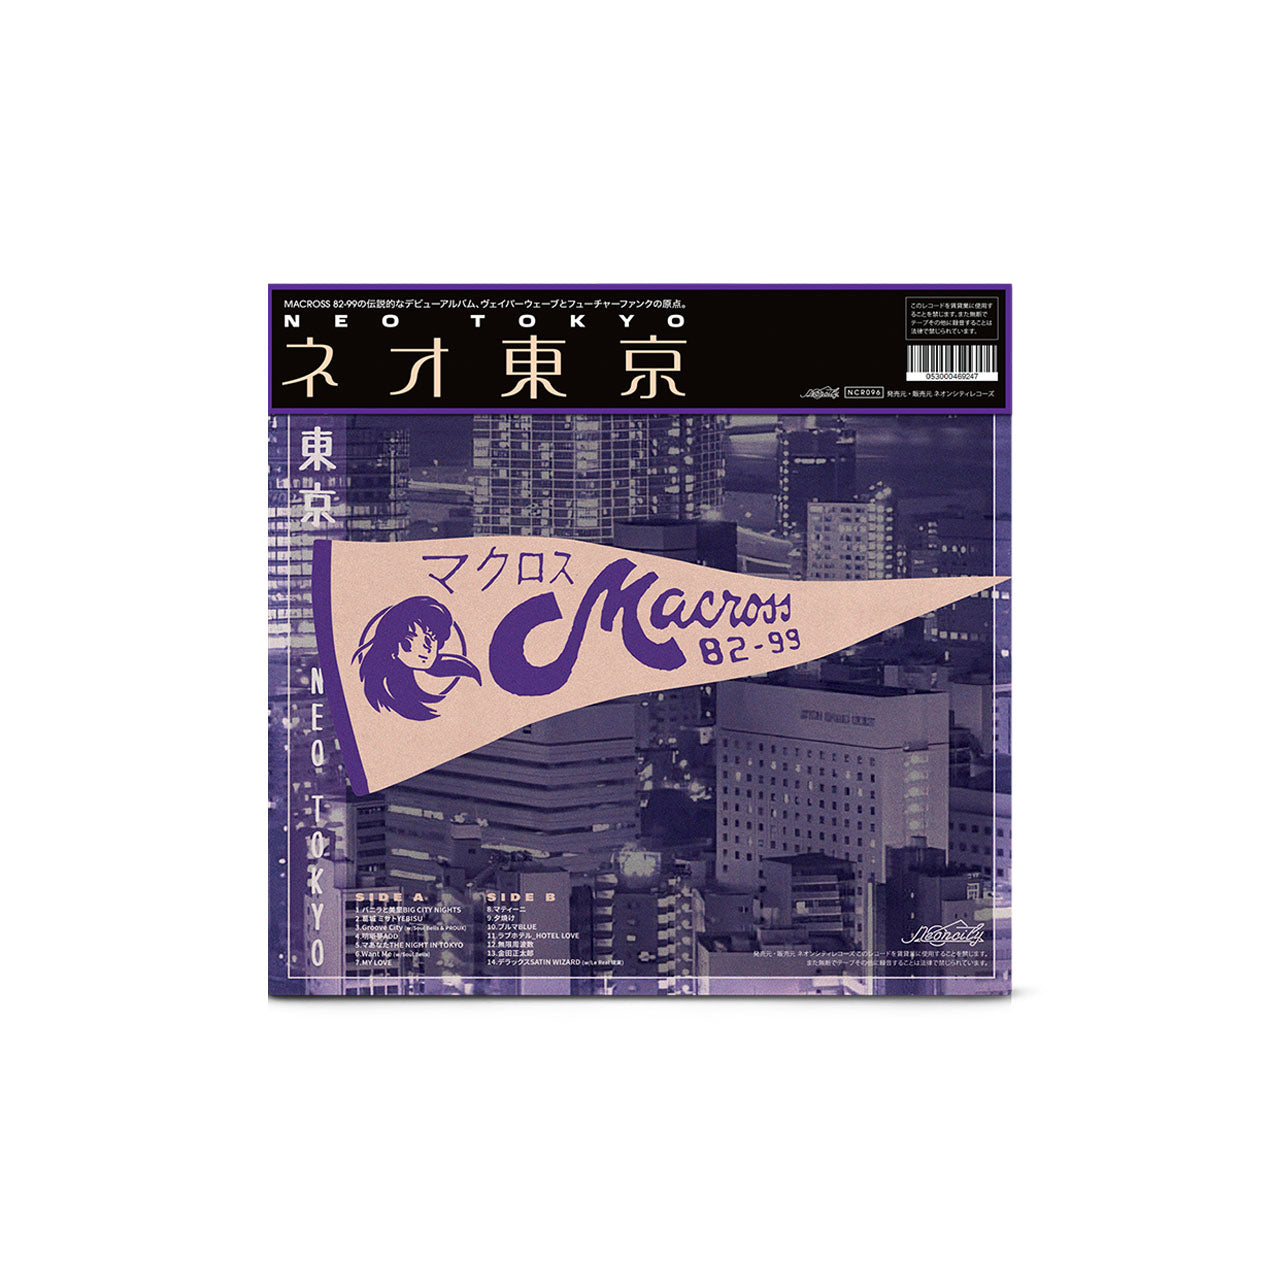 Pre-order] Macross 82-99 - 'ネオ東京 (Neo Tokyo)' 12